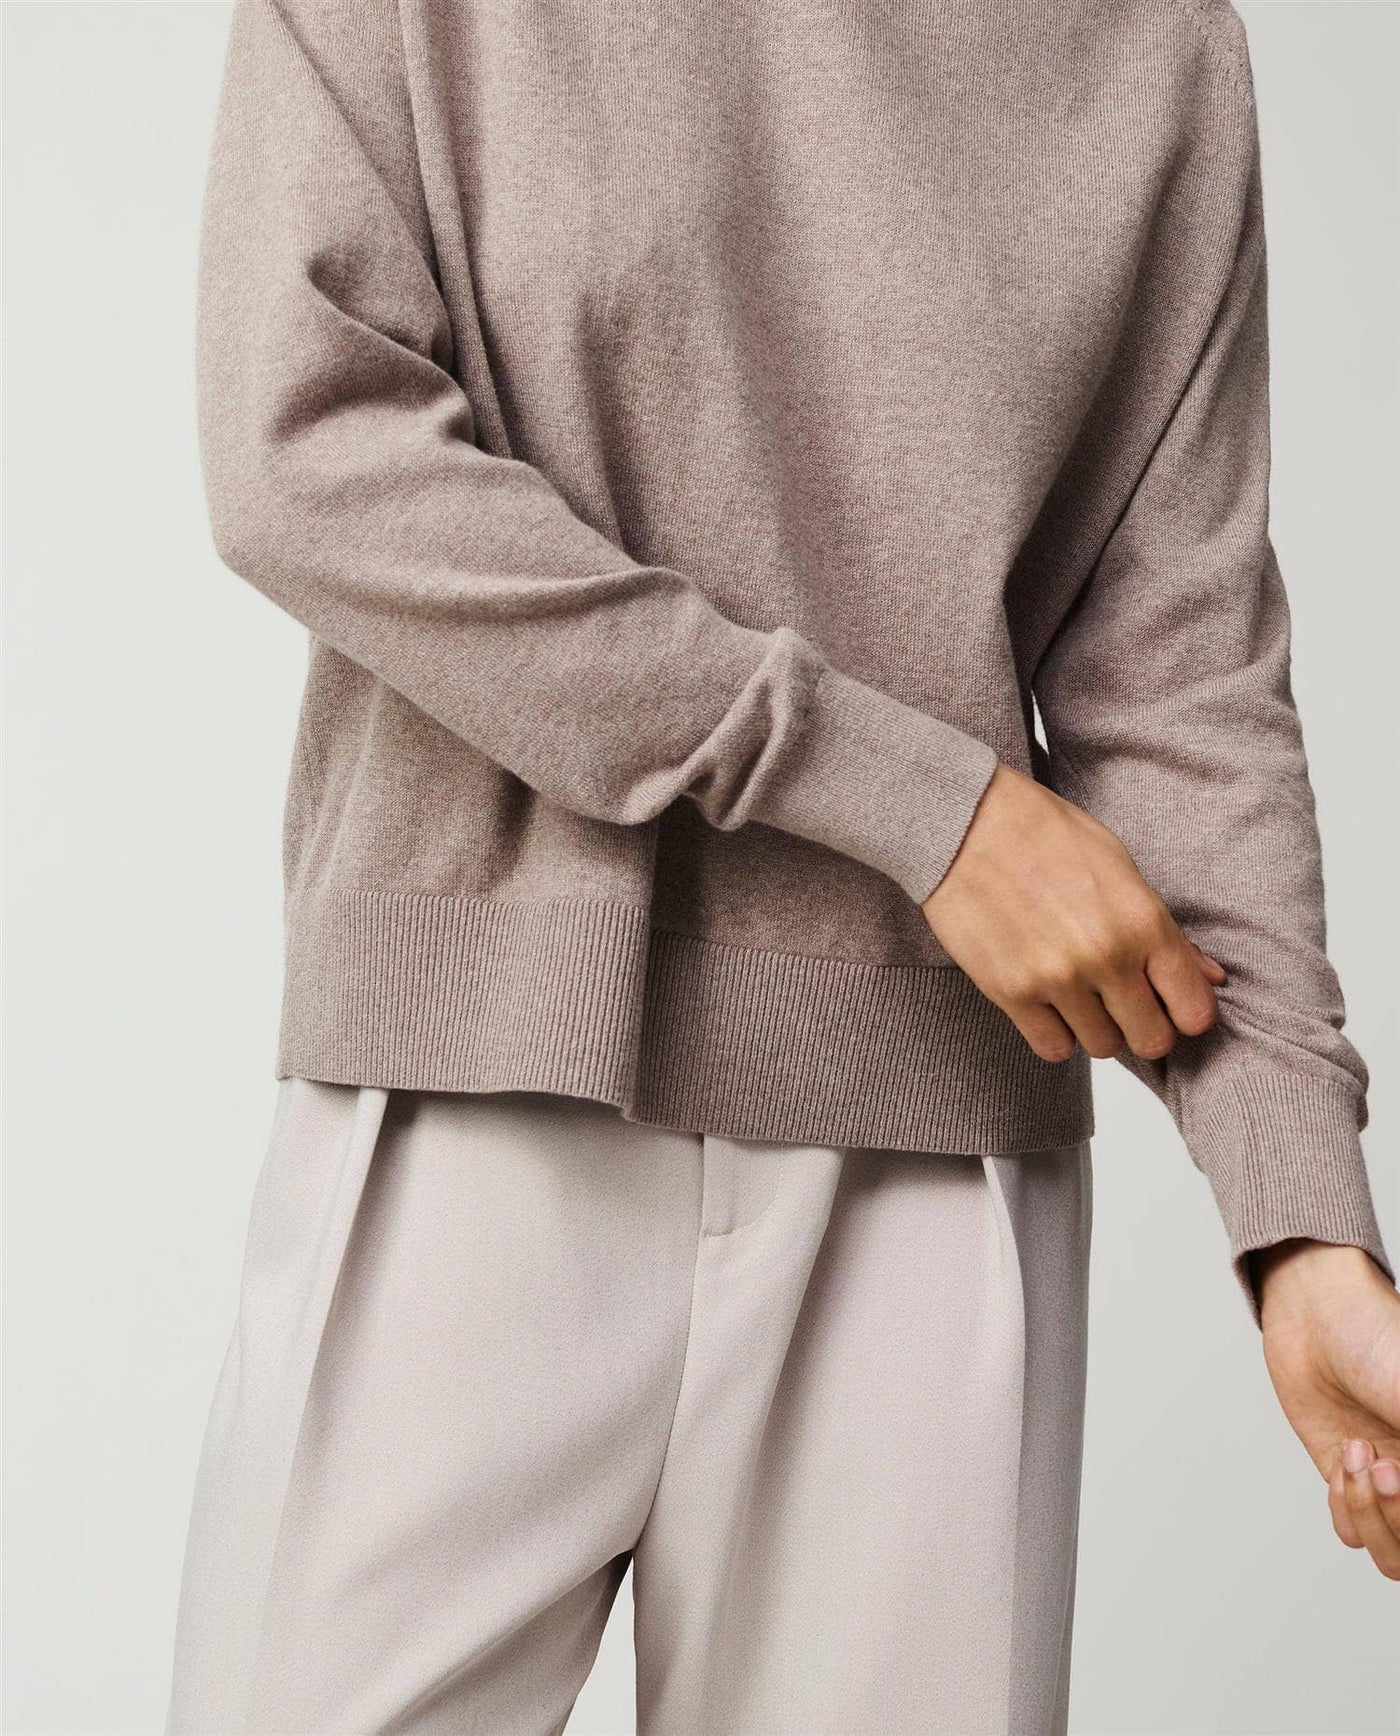 Freya Cotton/Cashmere Sweater